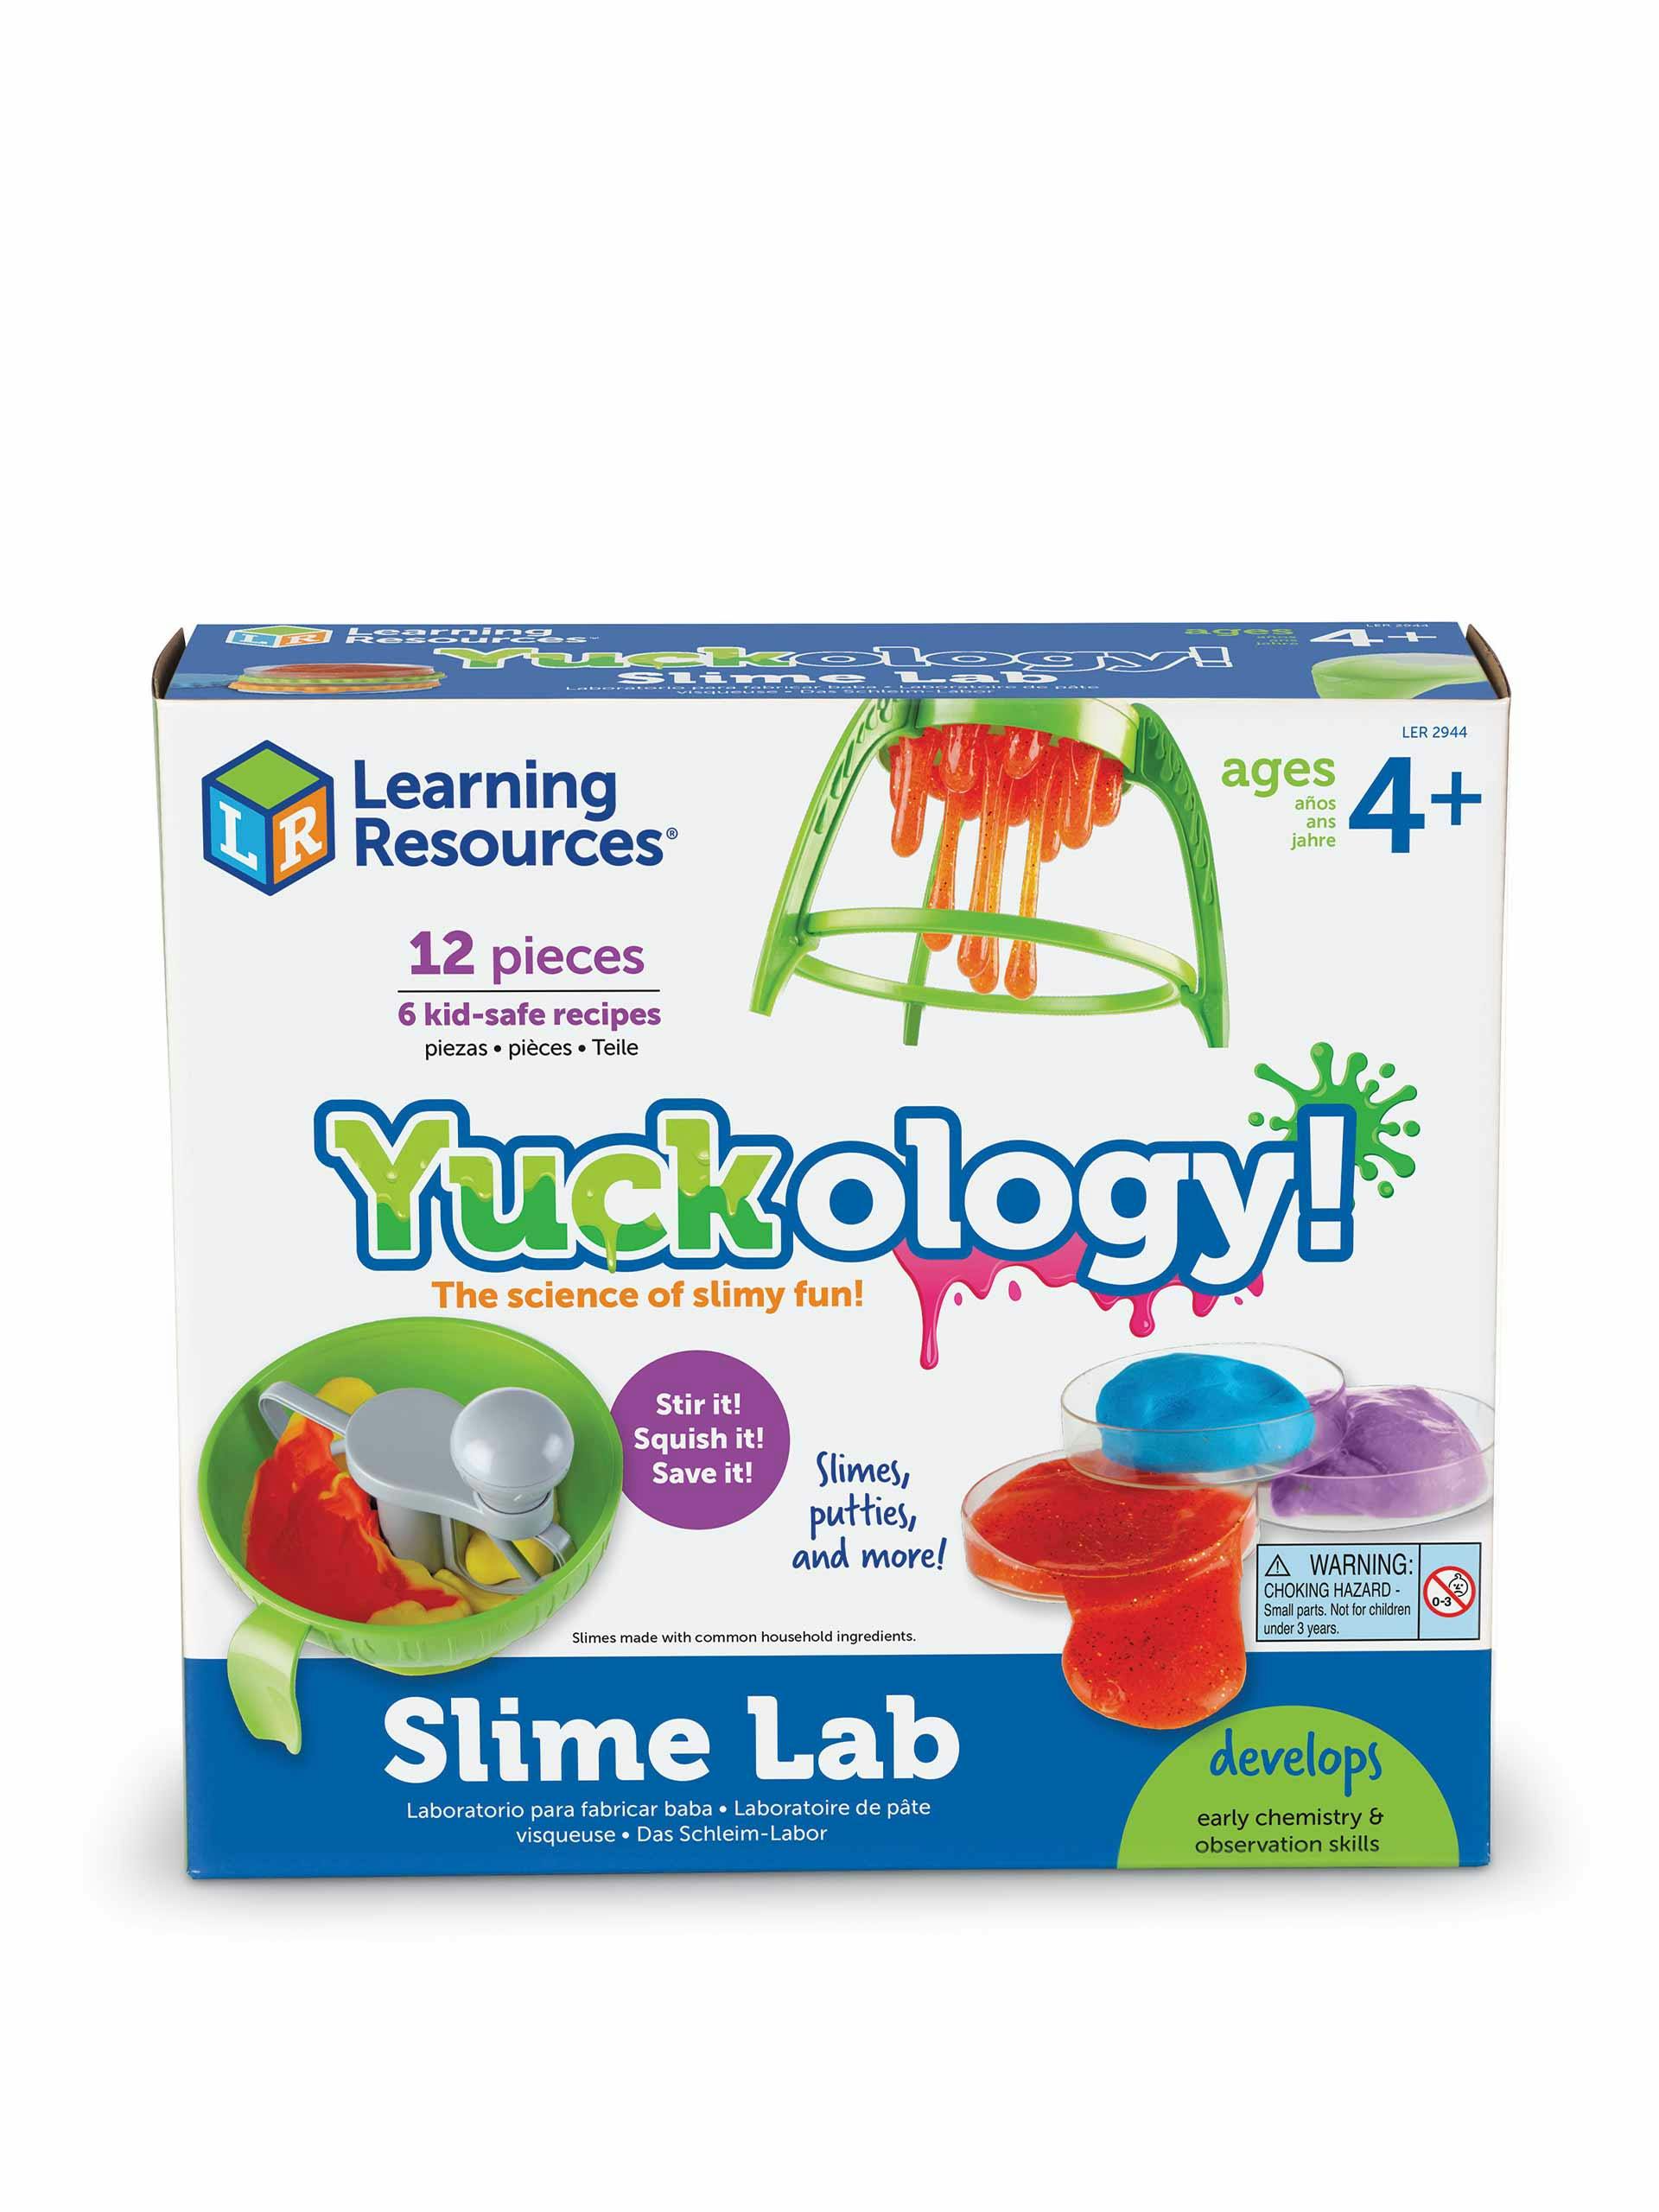 Yuckology children's game